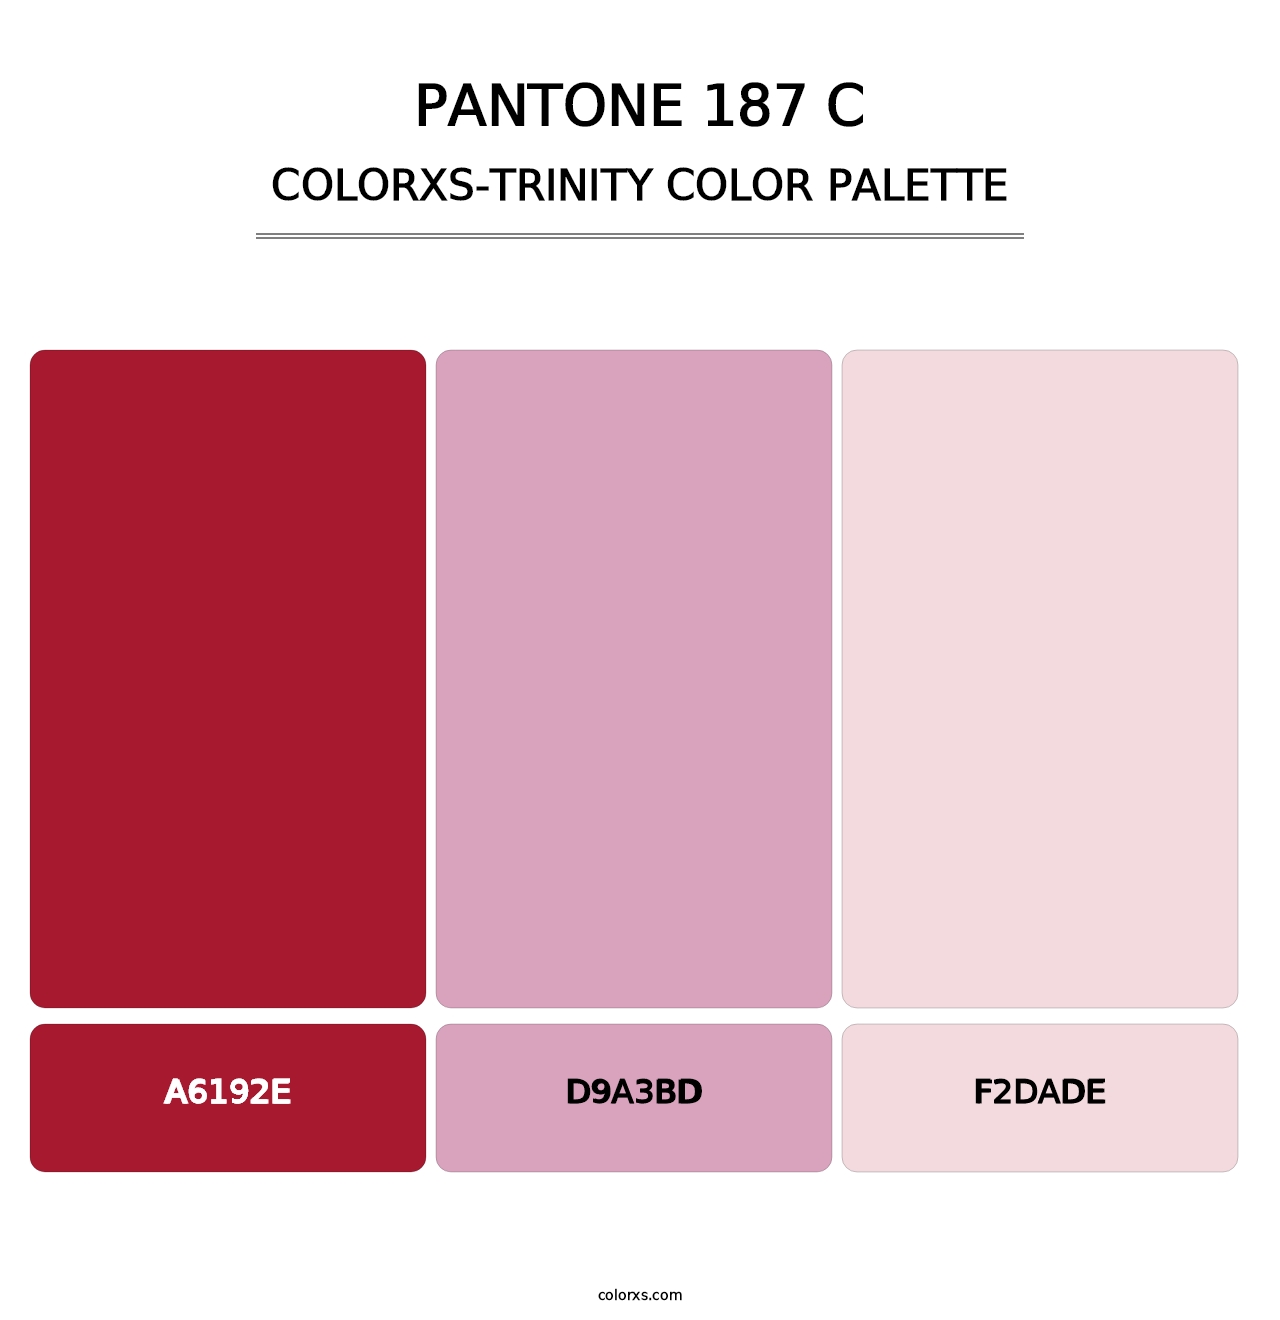 PANTONE 187 C - Colorxs Trinity Palette